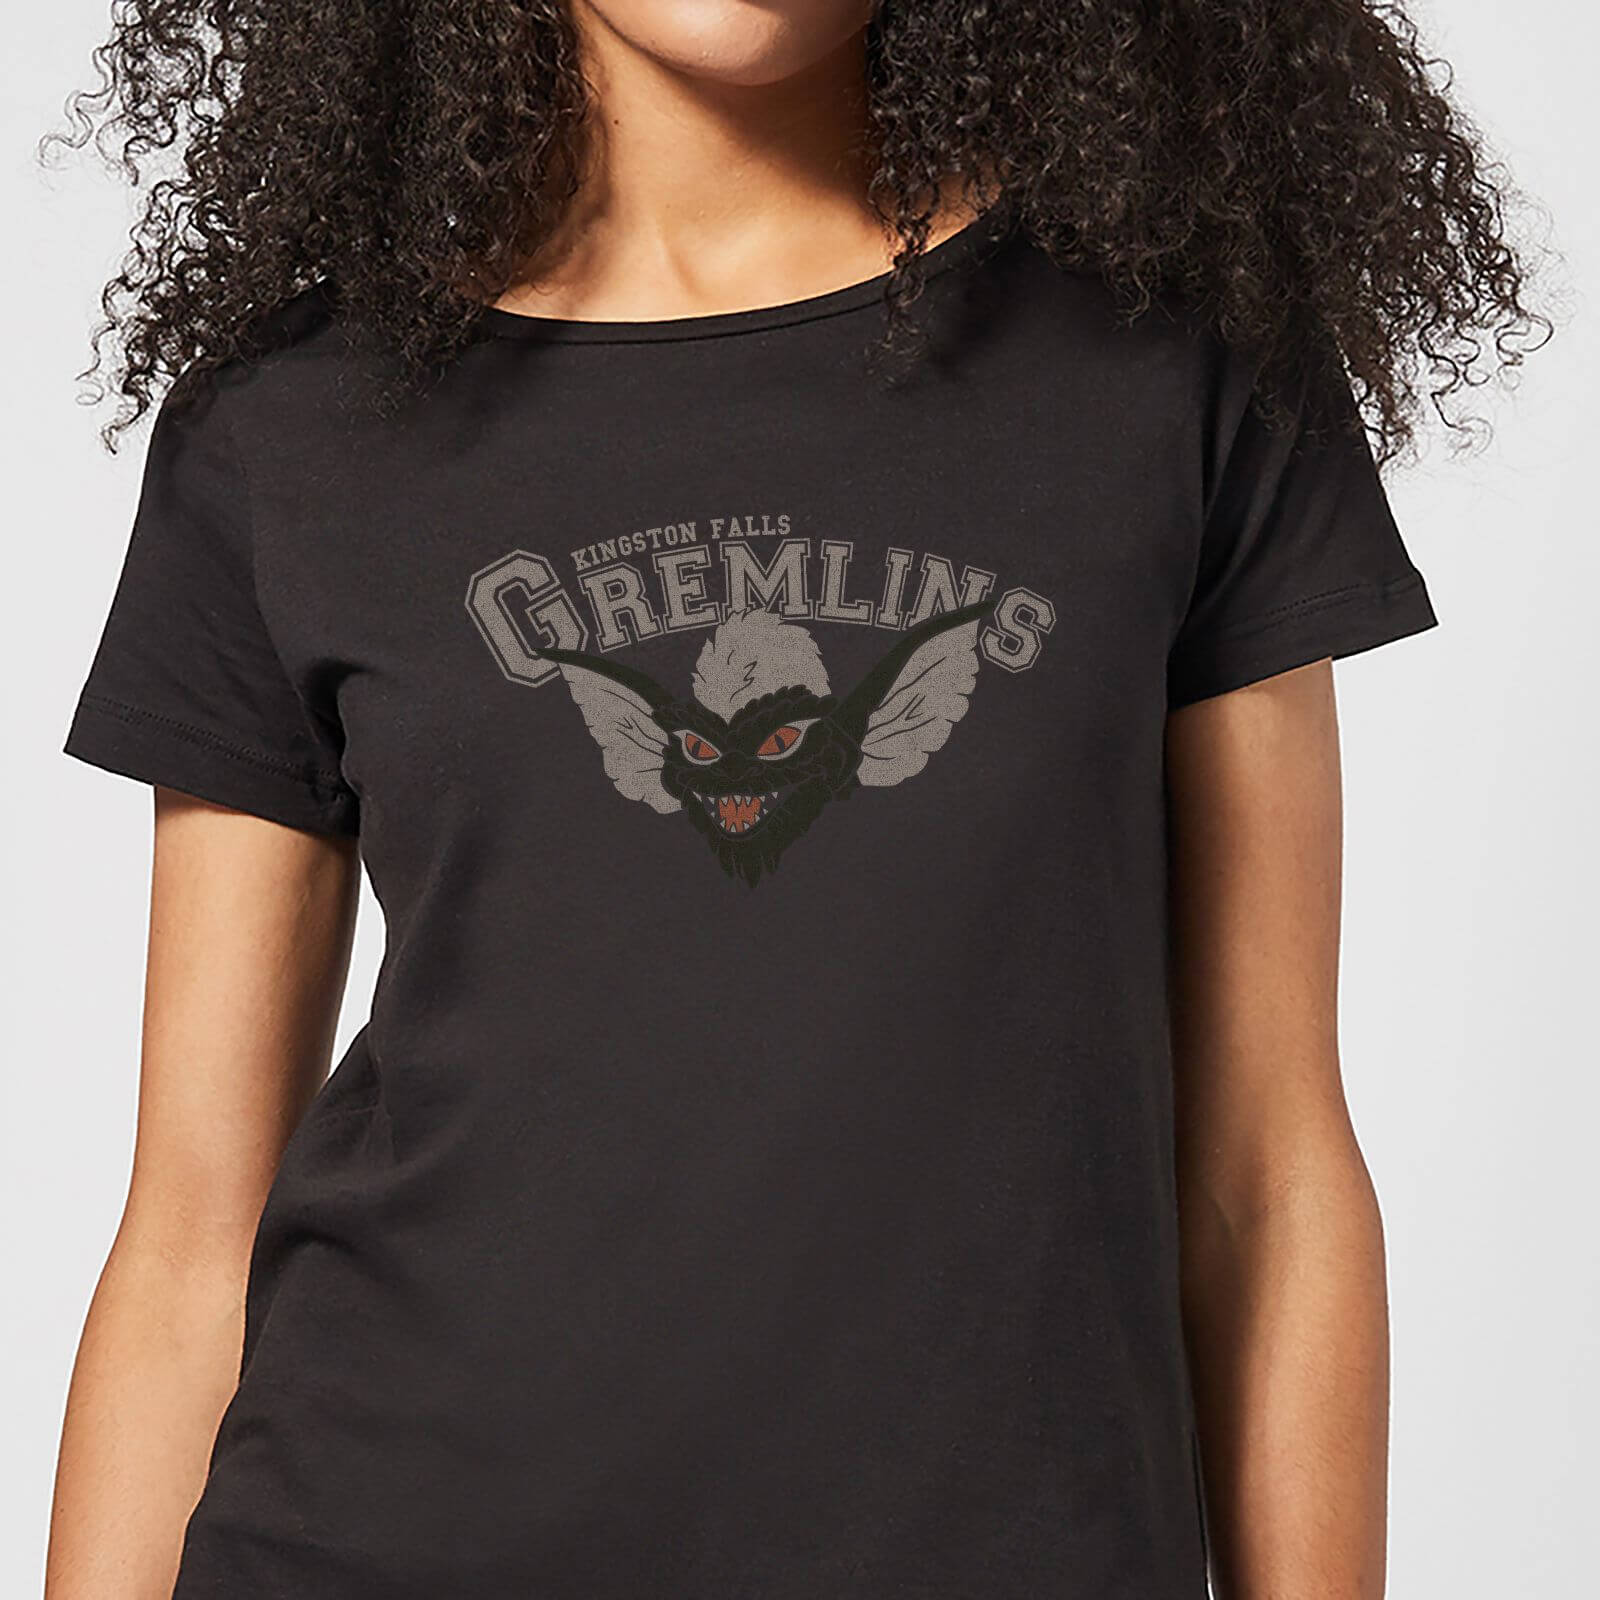 Gremlins Kingston Falls Sport Women's T-Shirt - Black - M - Black